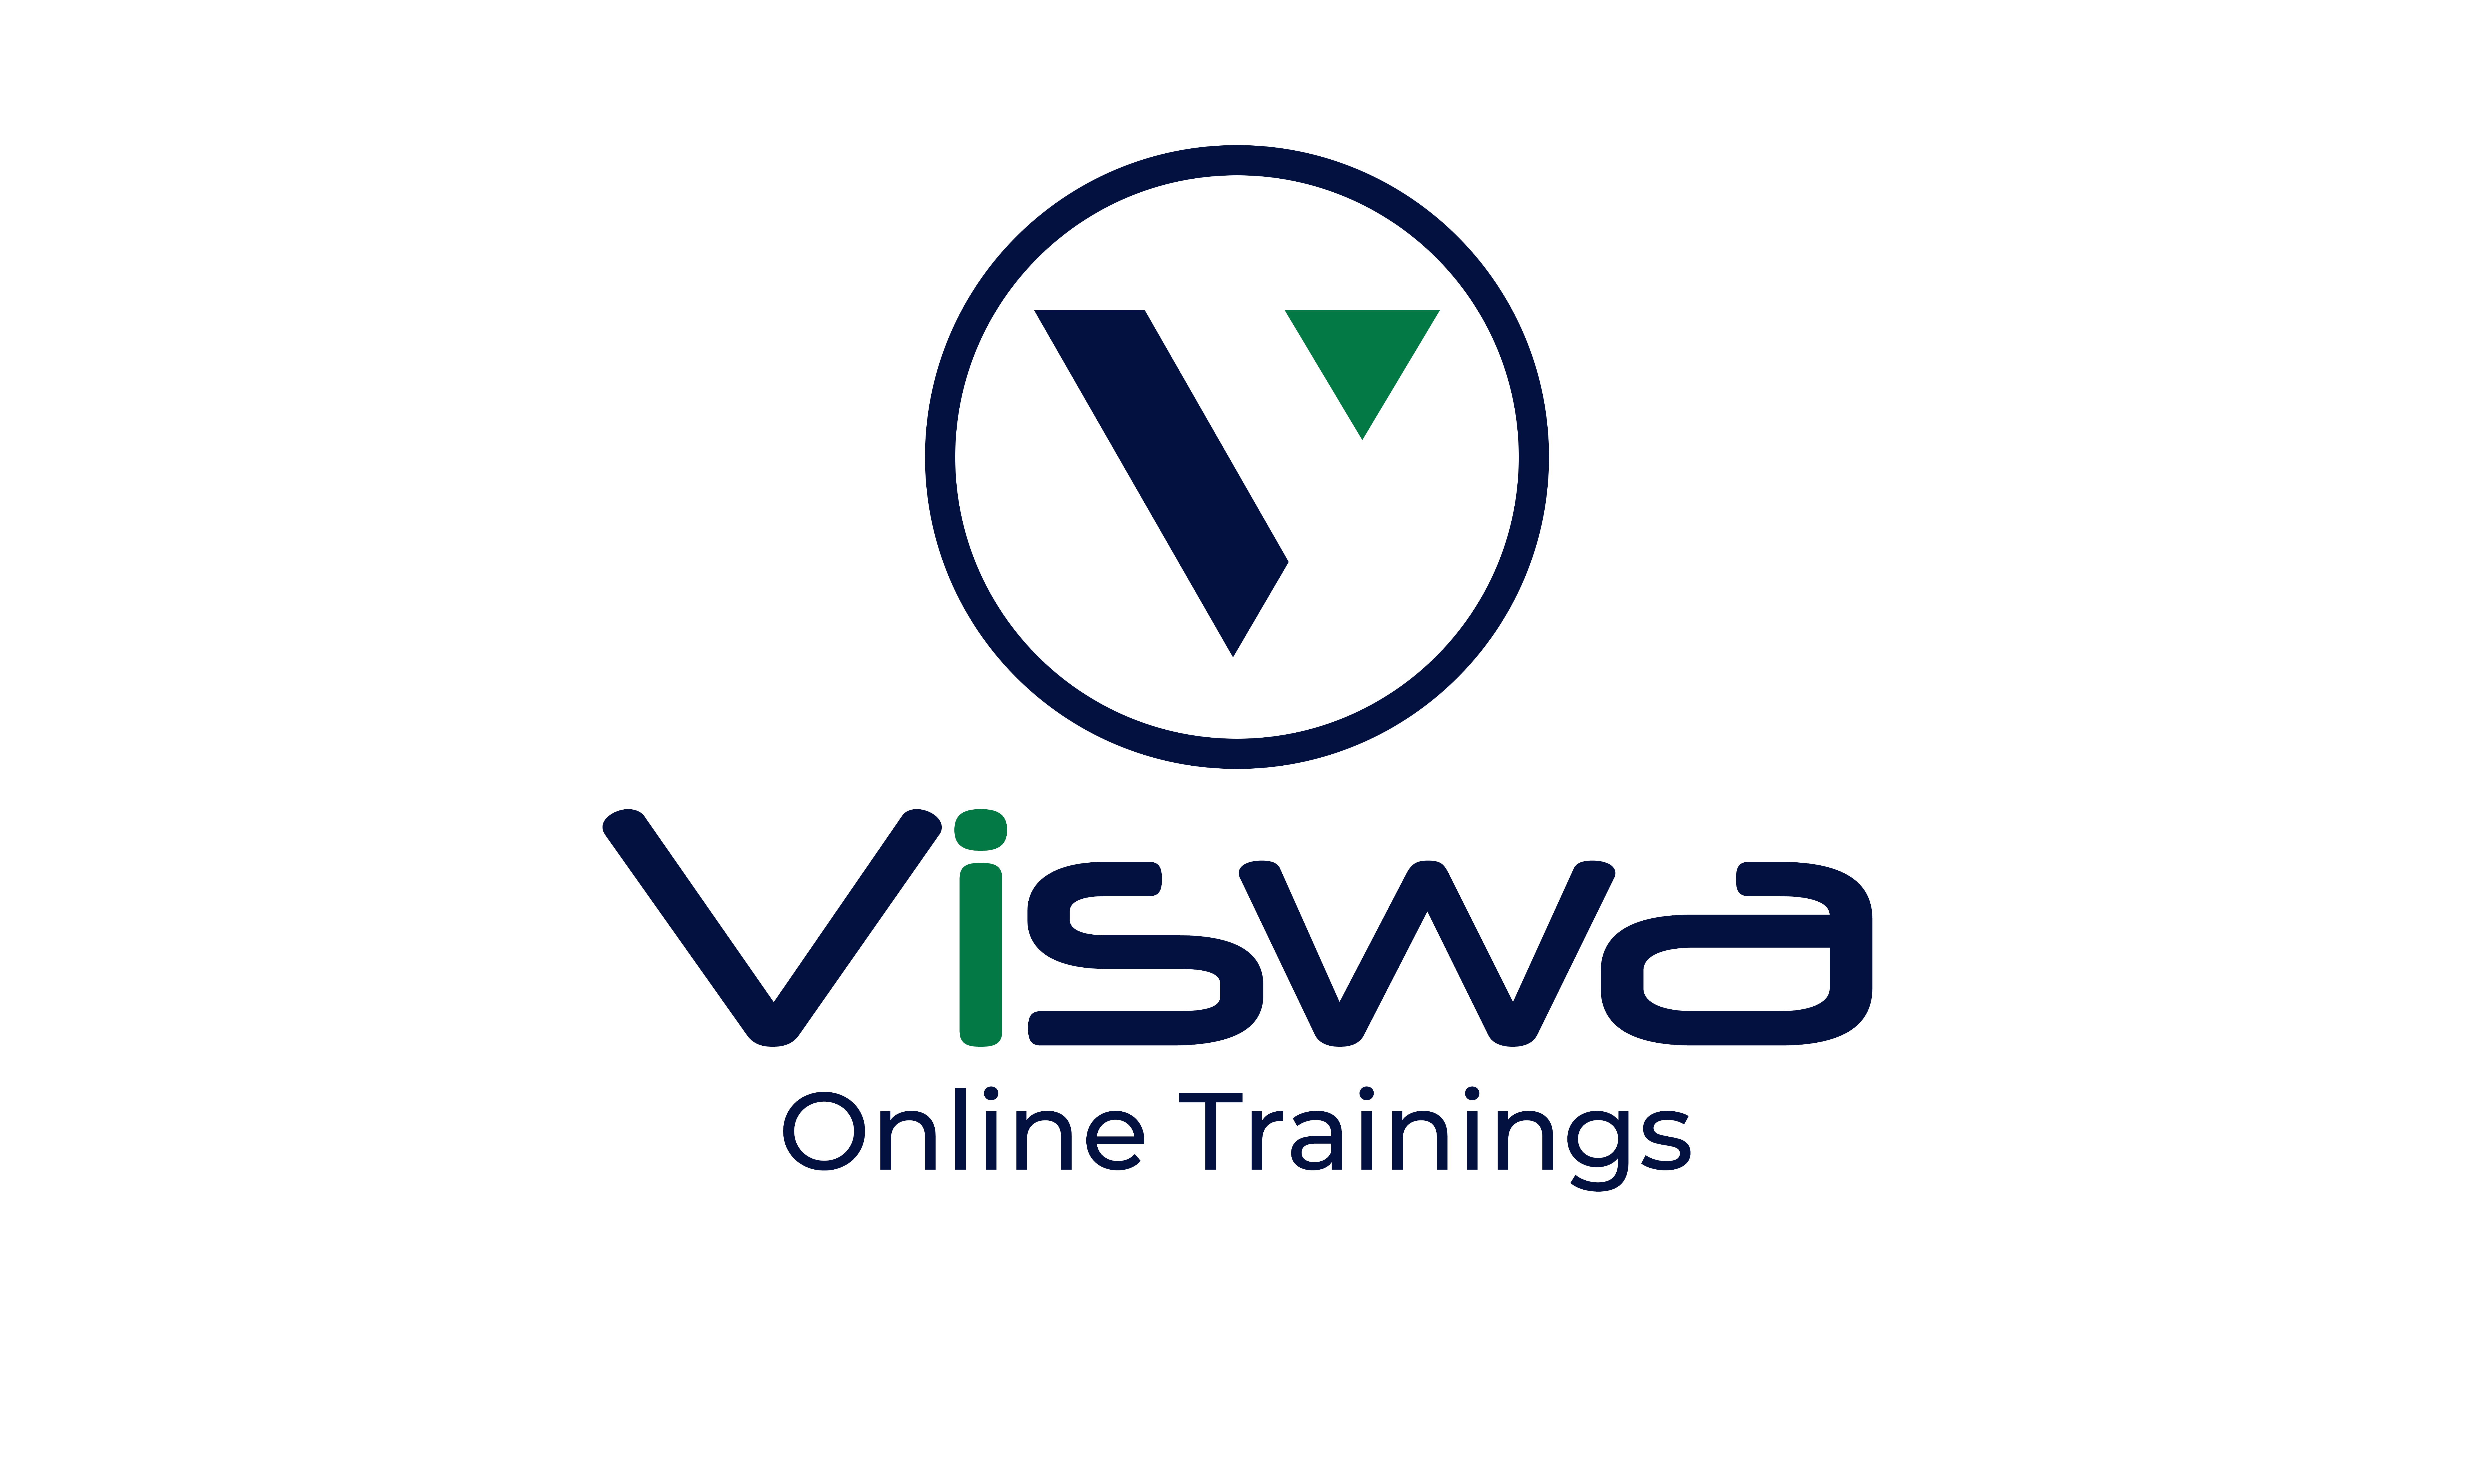 VISWA Online Trainings|Colleges|Education